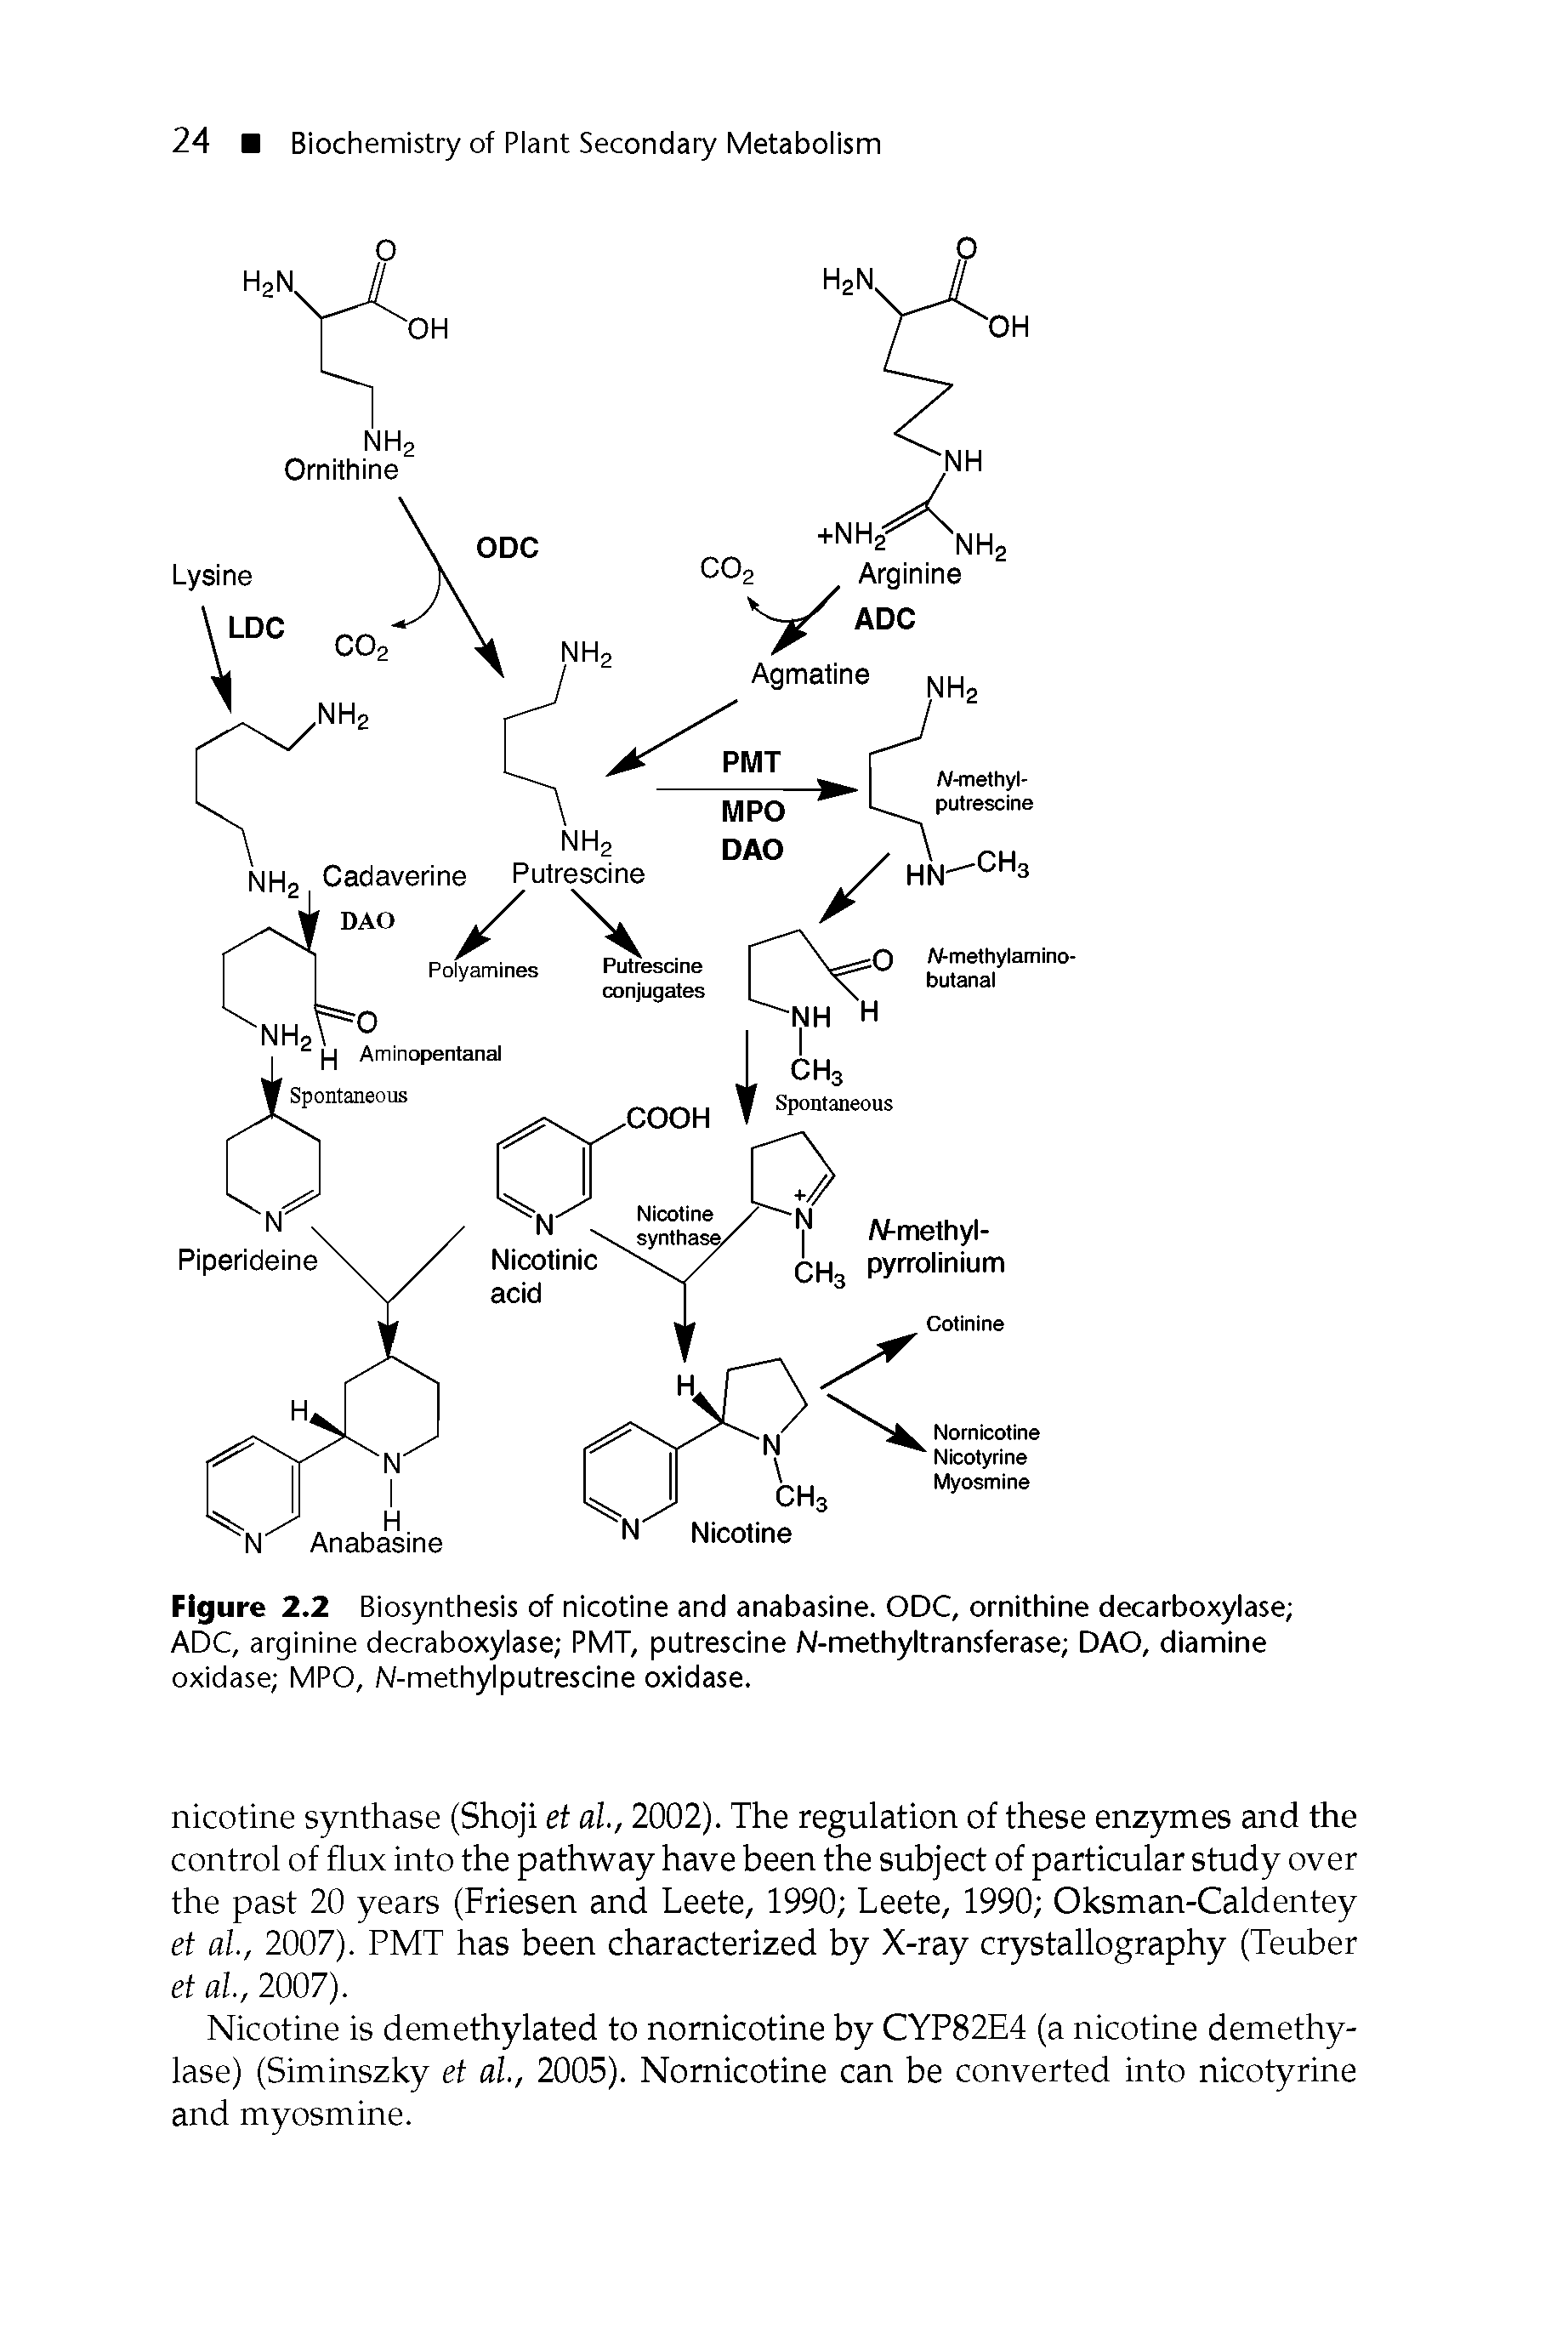 Figure 2.2 Biosynthesis of nicotine and anabasine. ODC, ornithine decarboxylase ADC, arginine decraboxylase PMT, putrescine N-methyltransferase DAO, diamine oxidase MPO, N-methylputresdne oxidase.